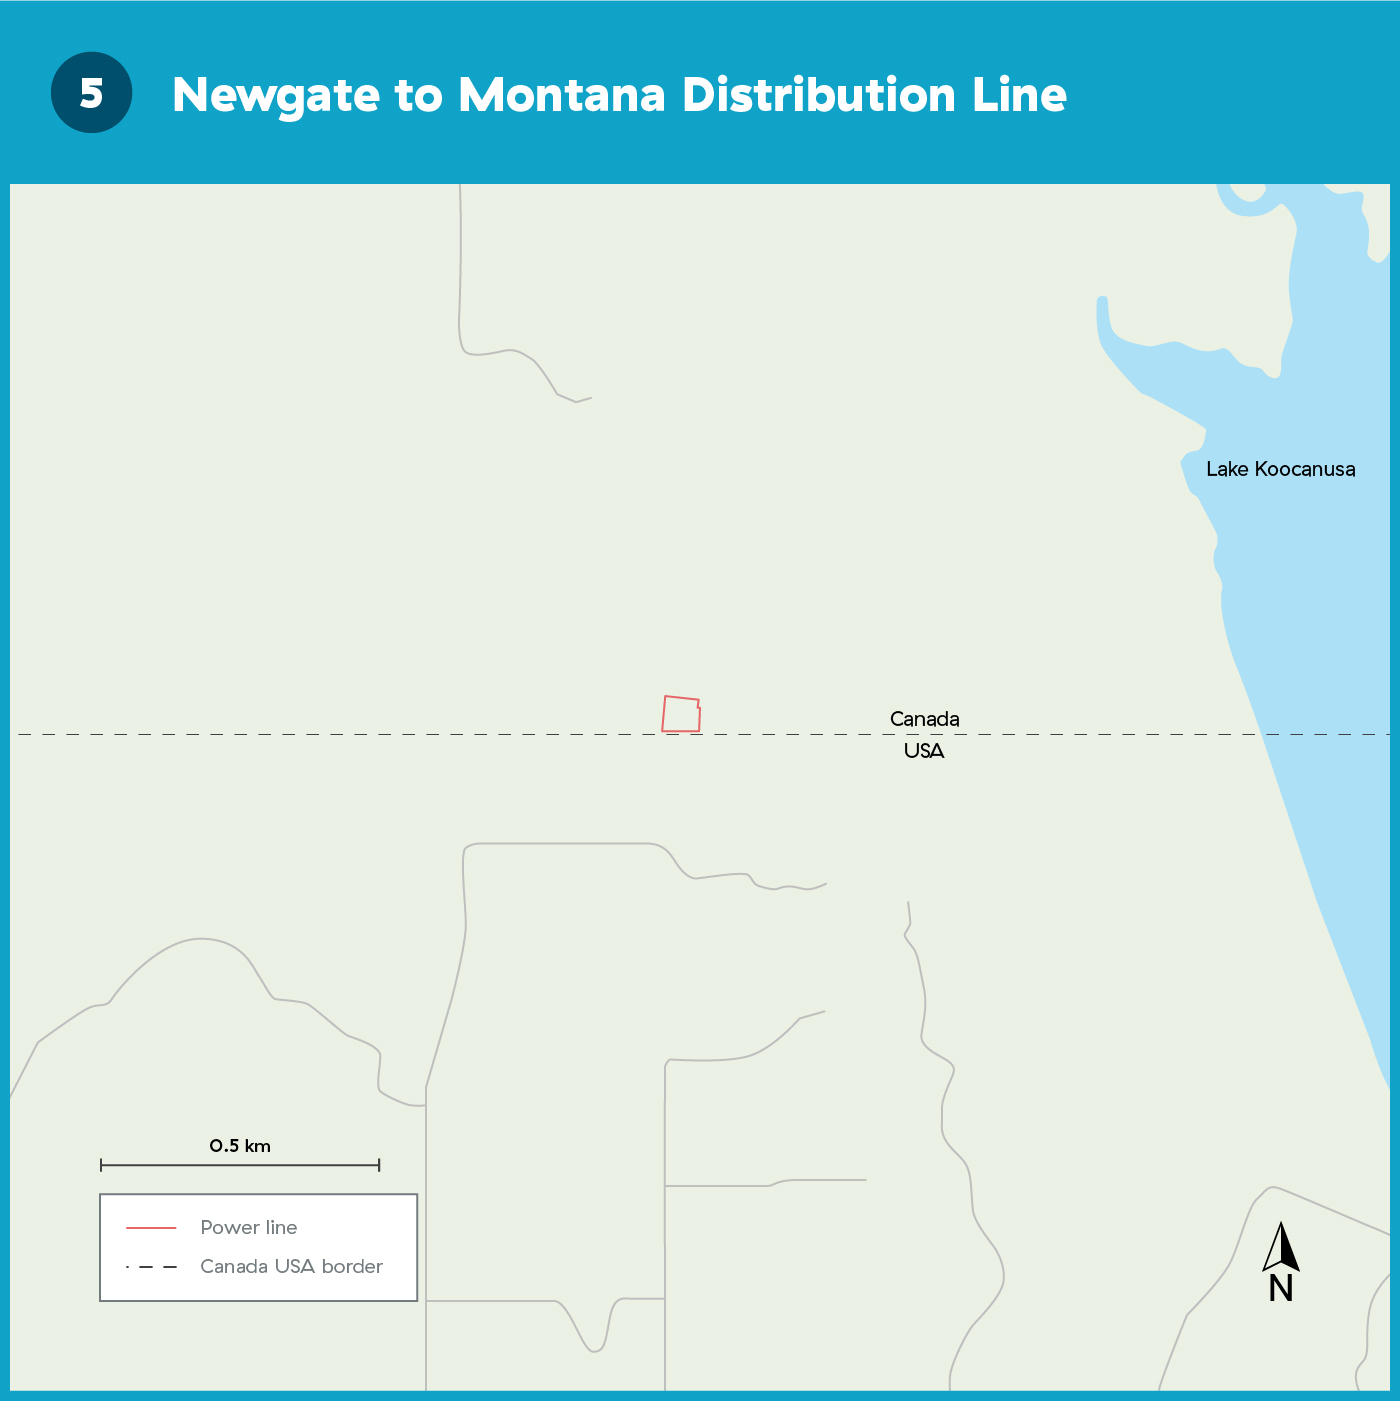 Distribution Line (undergound) from Montana, USA to Newgate, east of Cranbrook